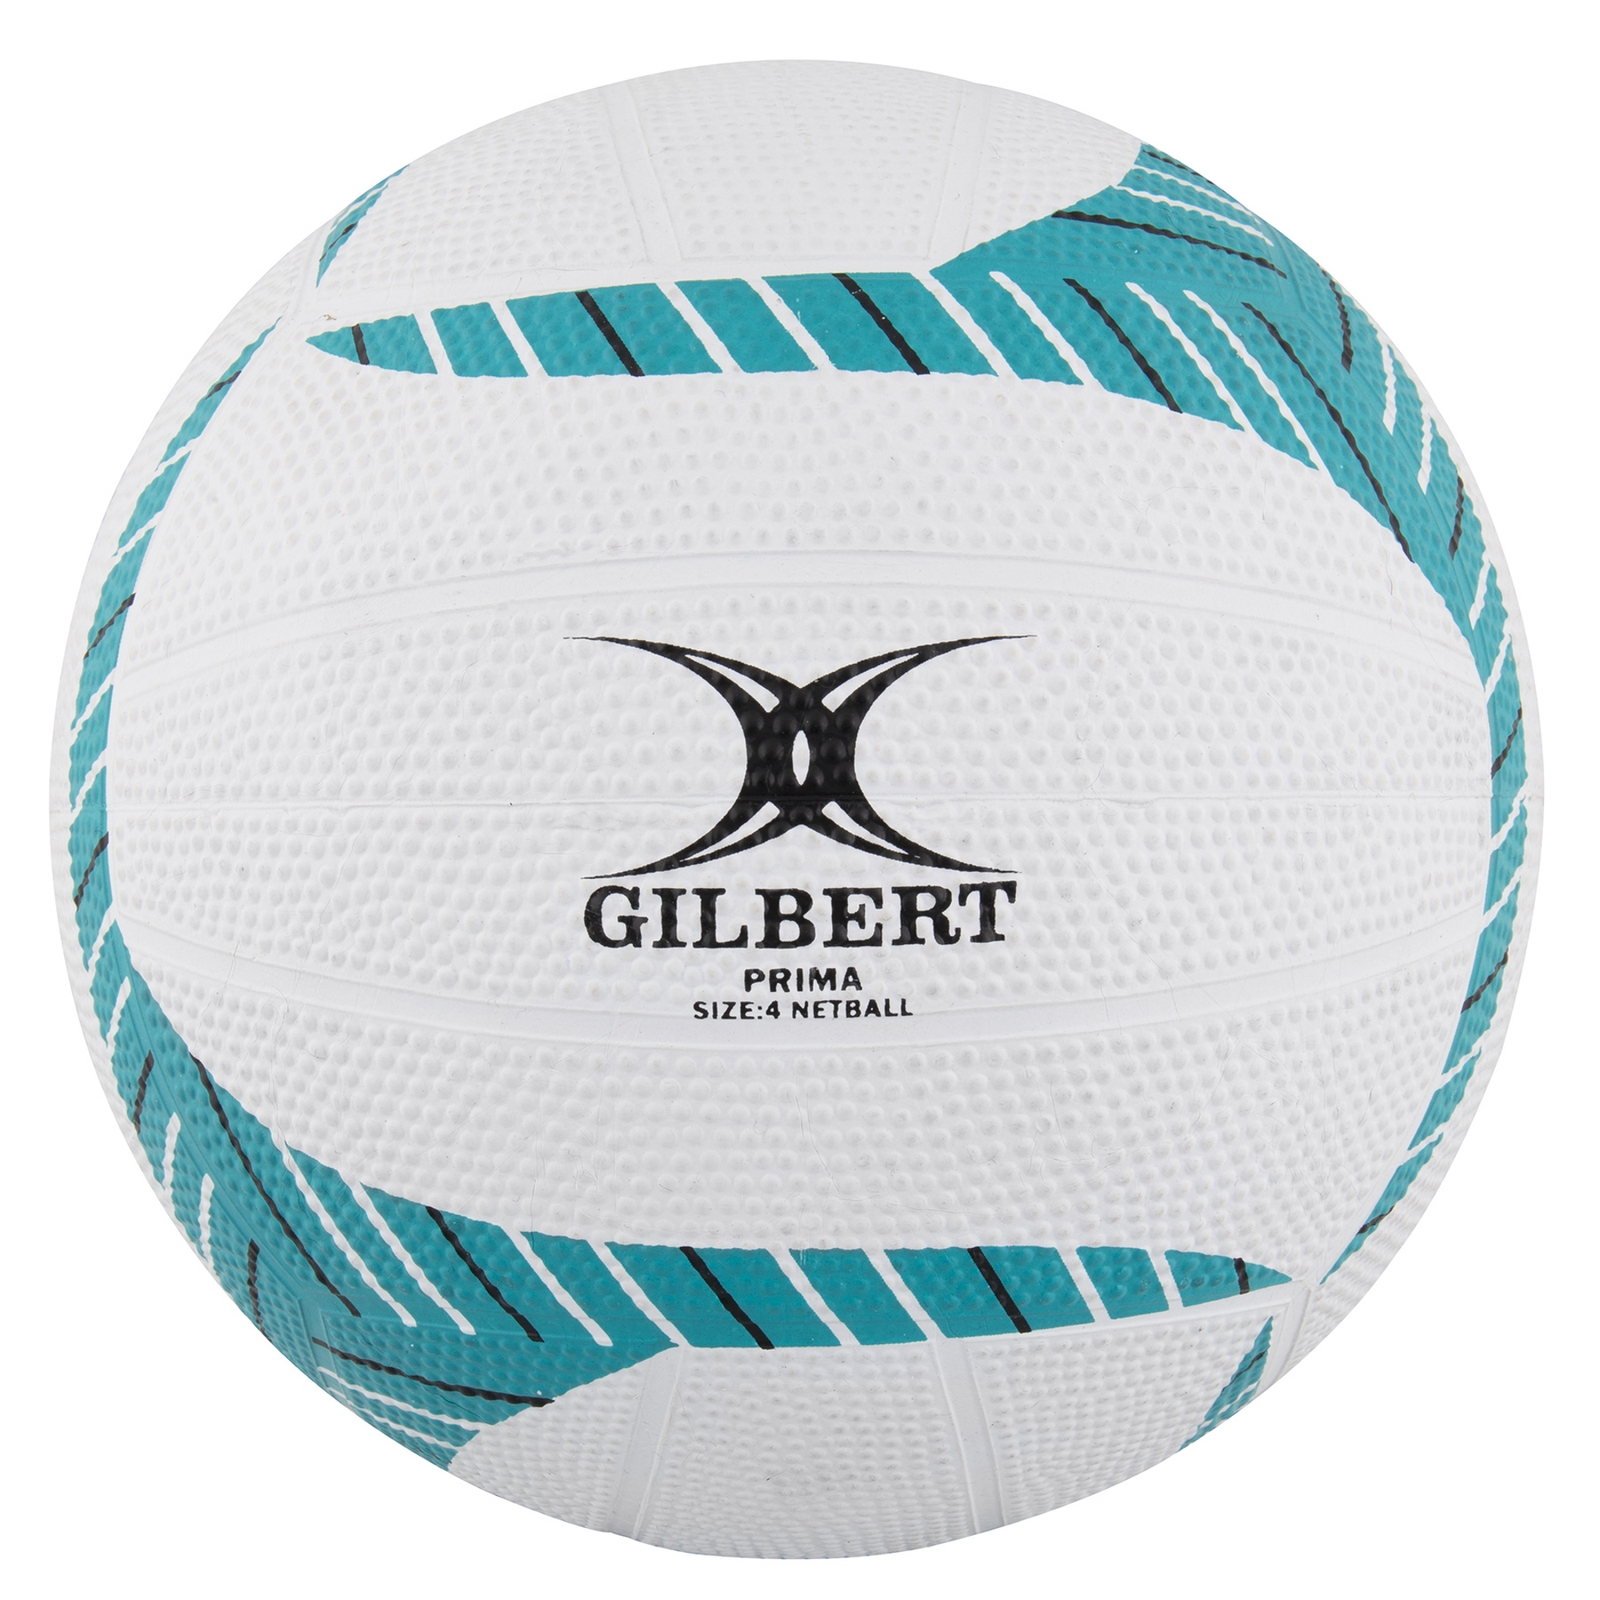 Gilbert Prima Netball - Size 4